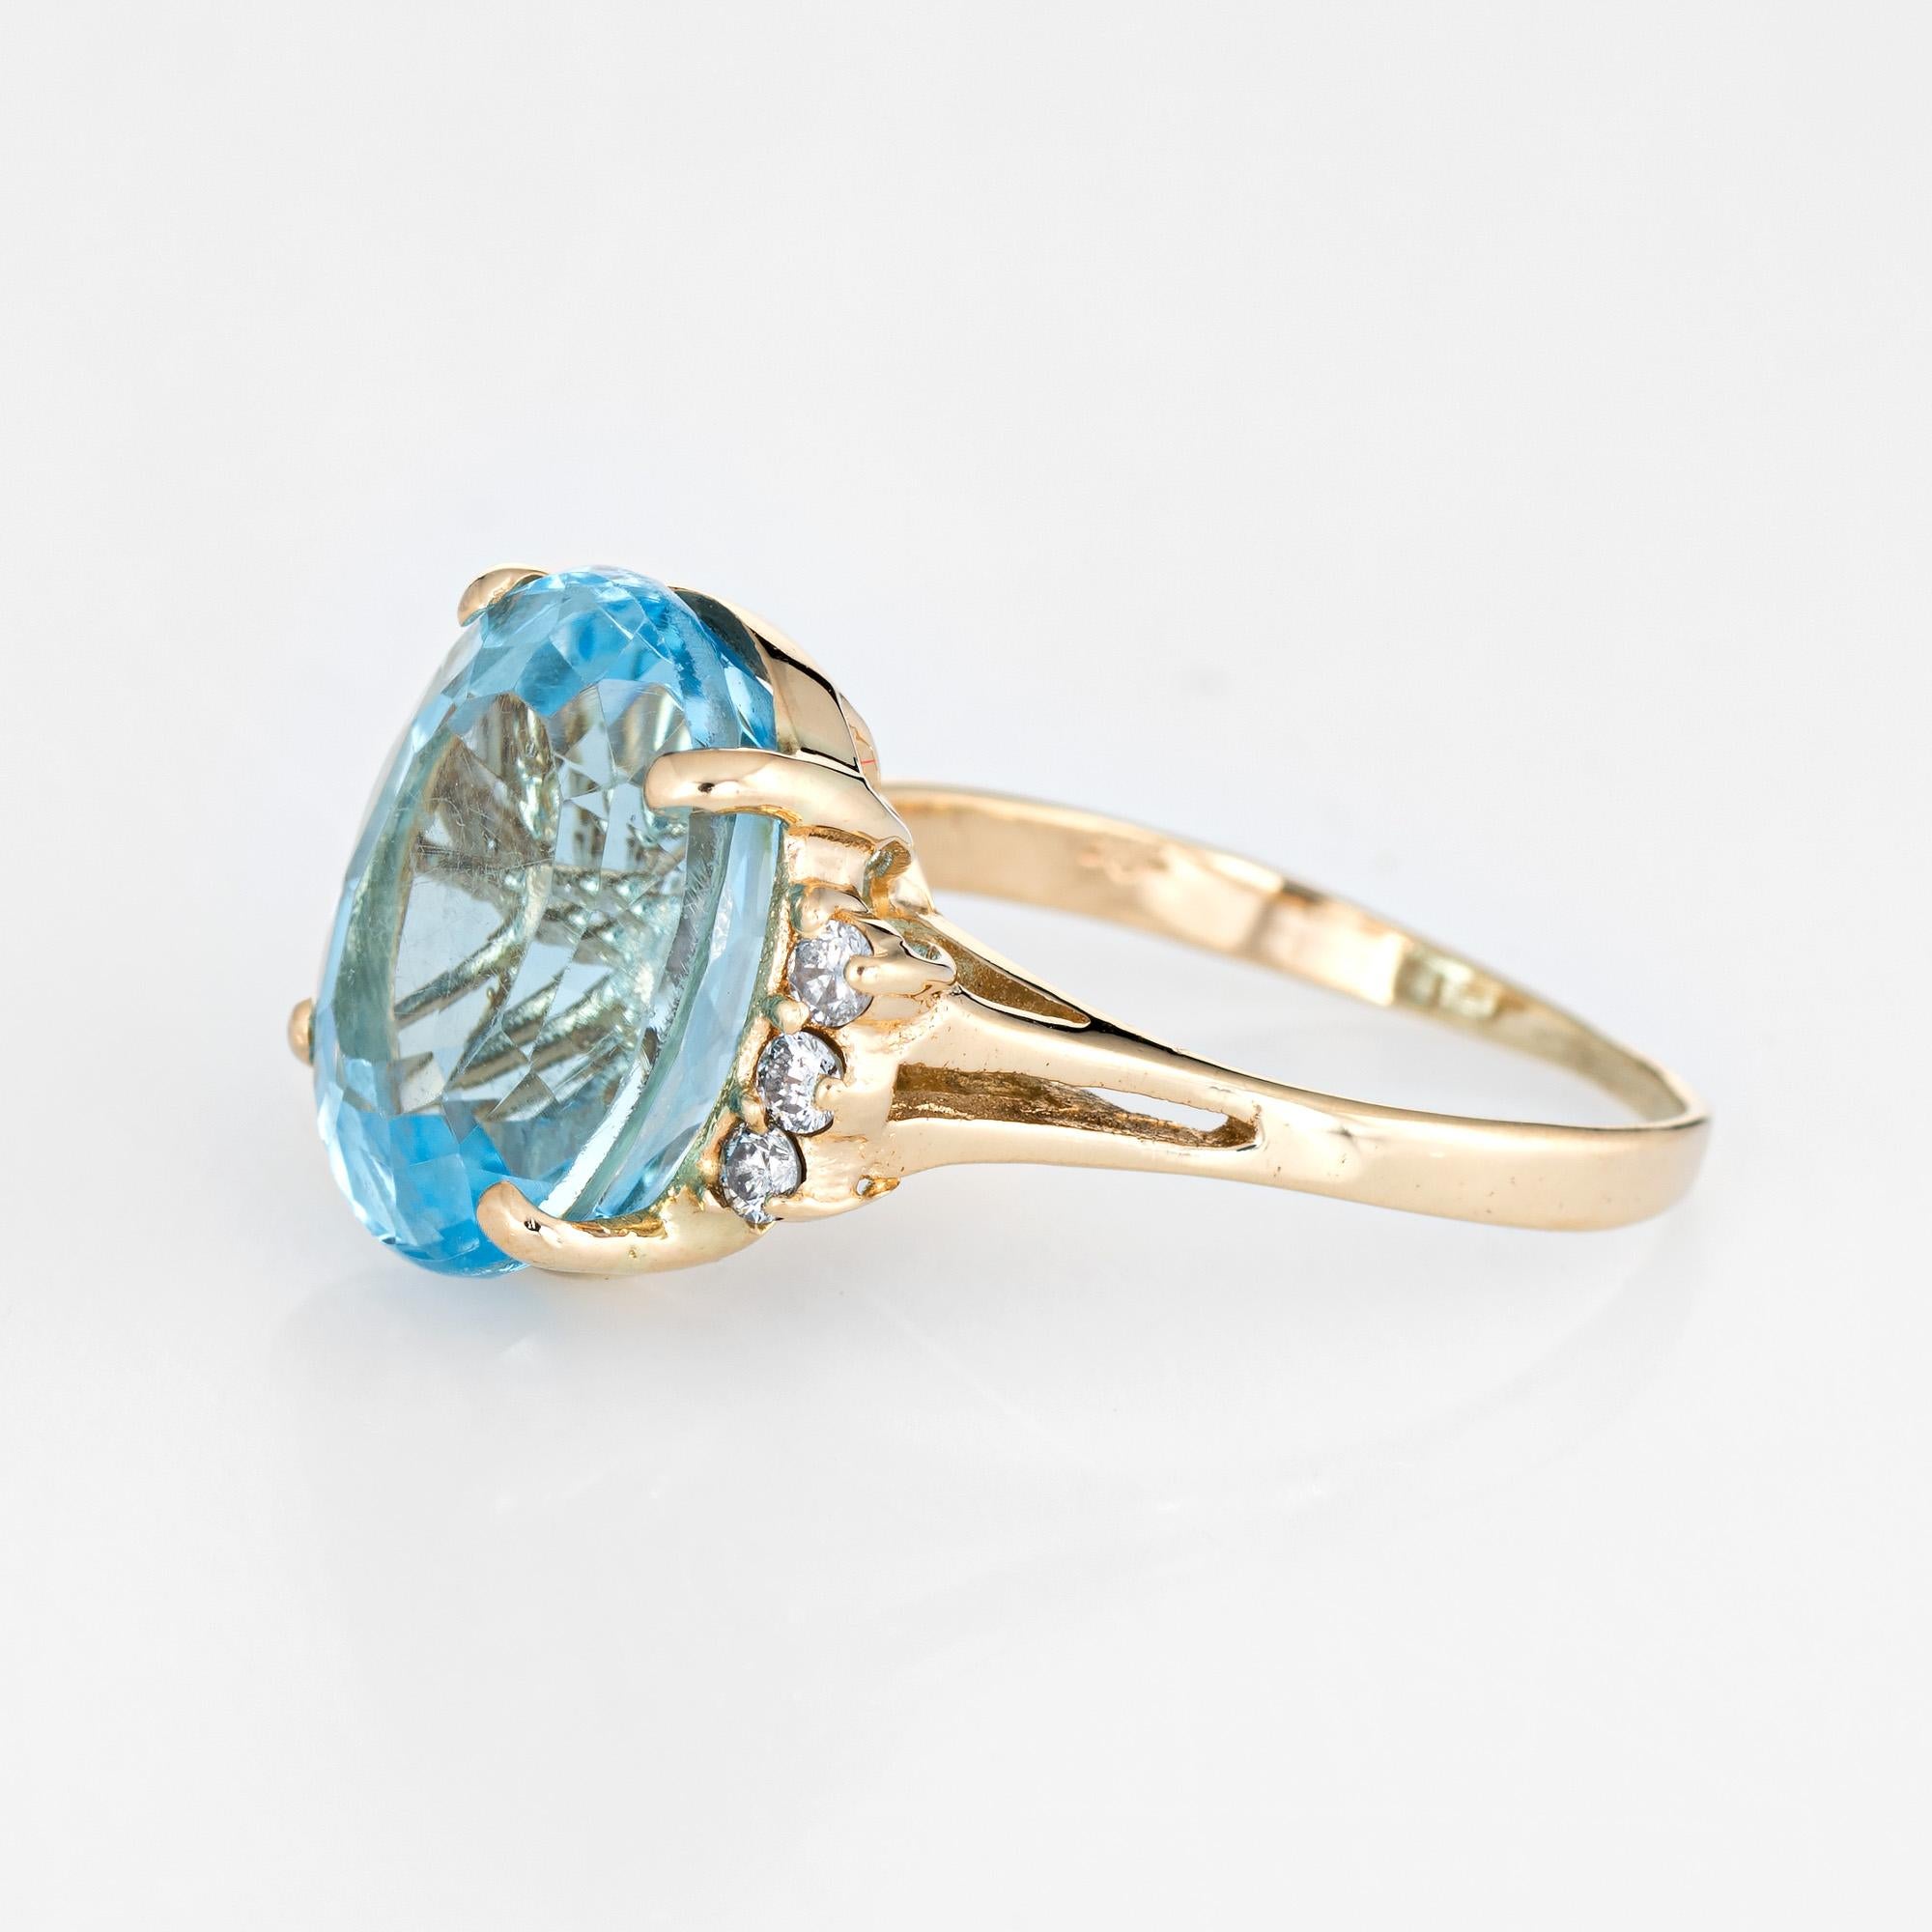 Modern 12 Carat Blue Topaz Diamond Ring Estate 14 Karat Gold Oval Cut Cocktail Jewelry